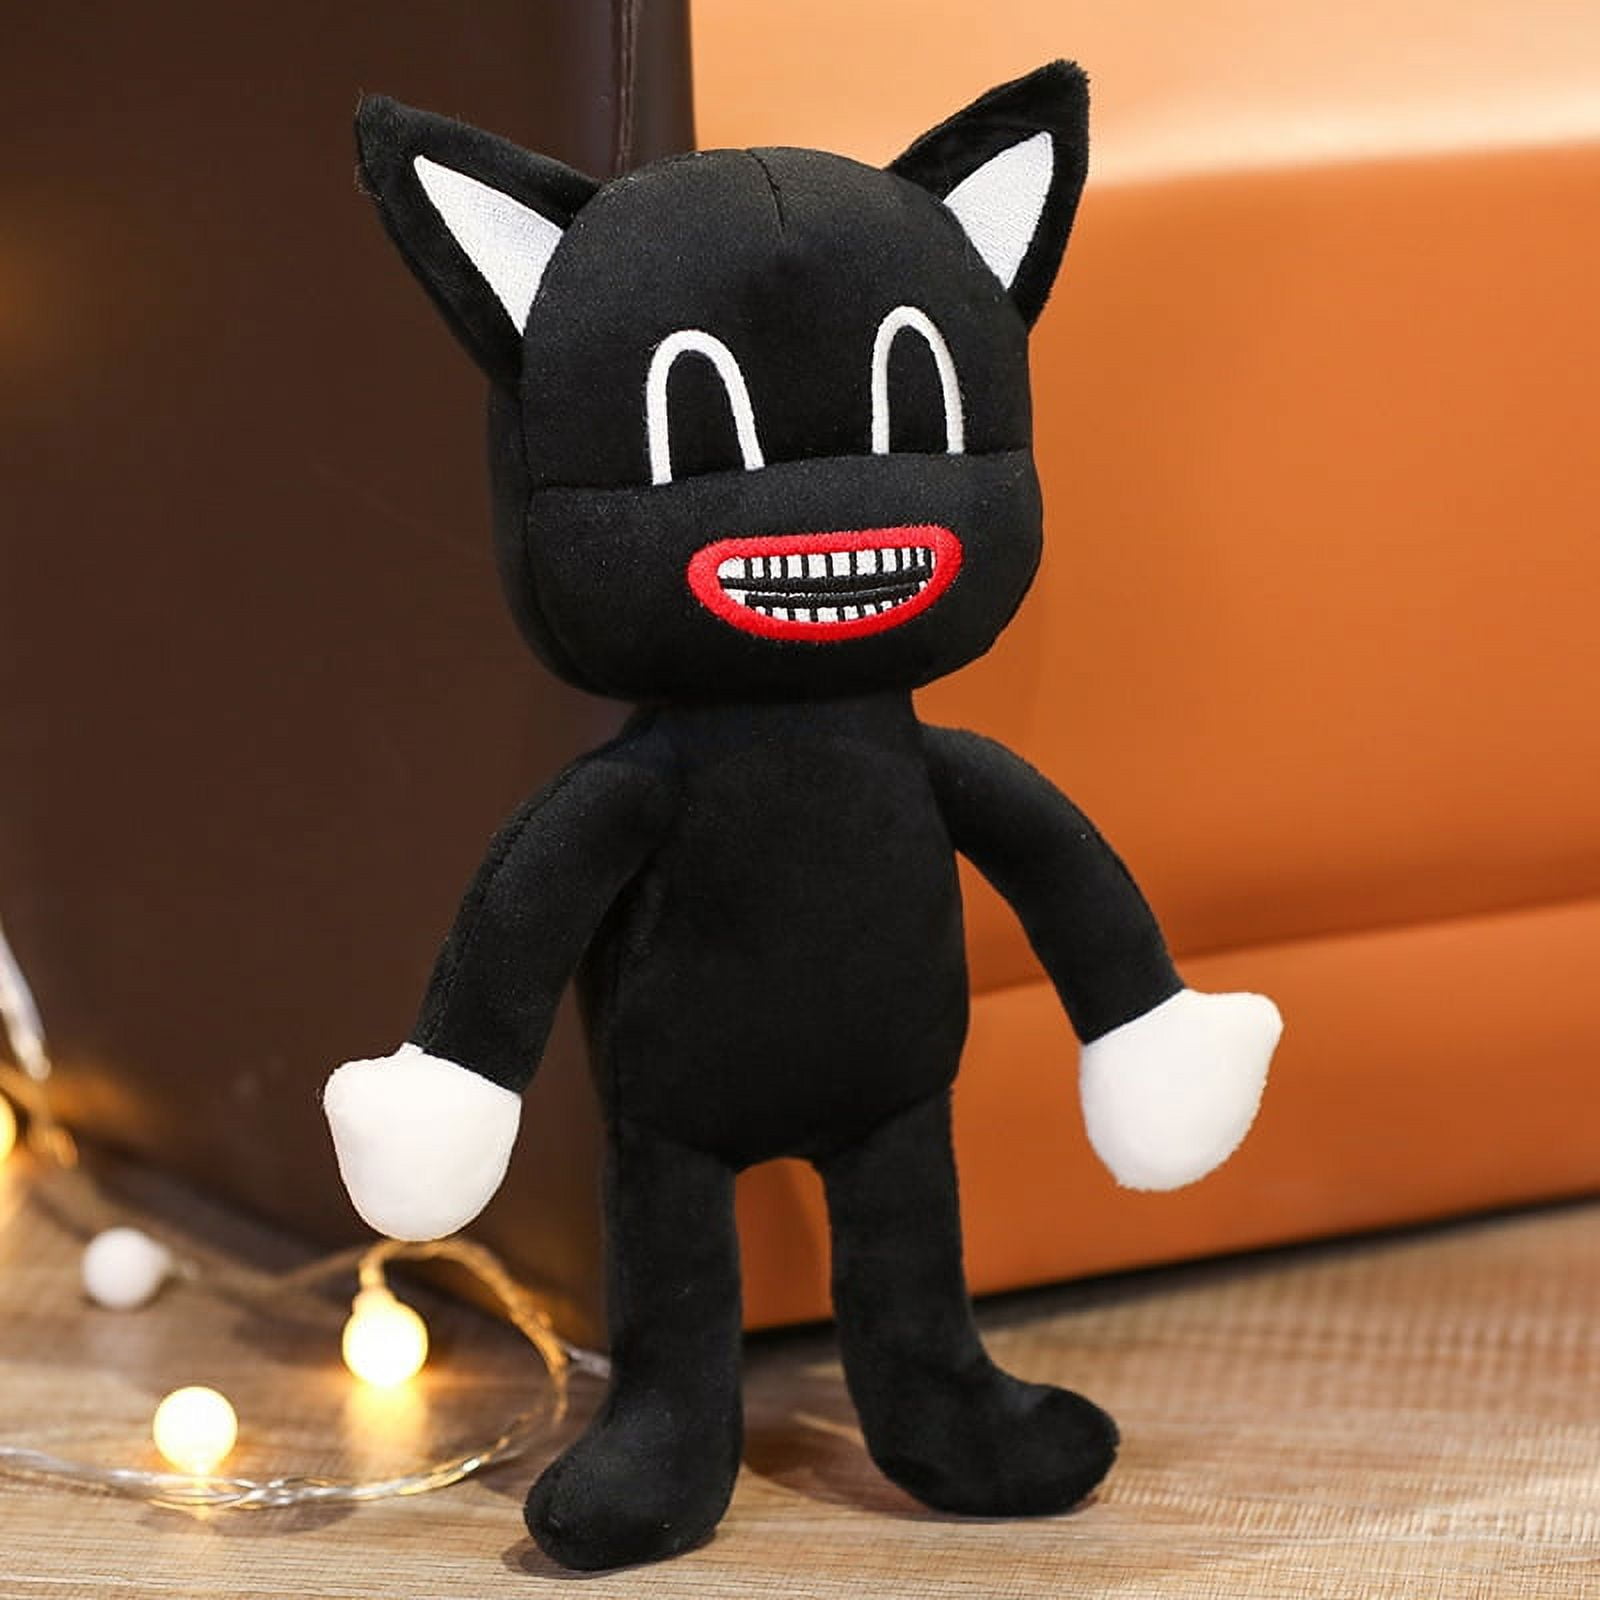 Siren Head Jogo Horror Monster Cartoon Pelúcia Brinquedo Black Cat